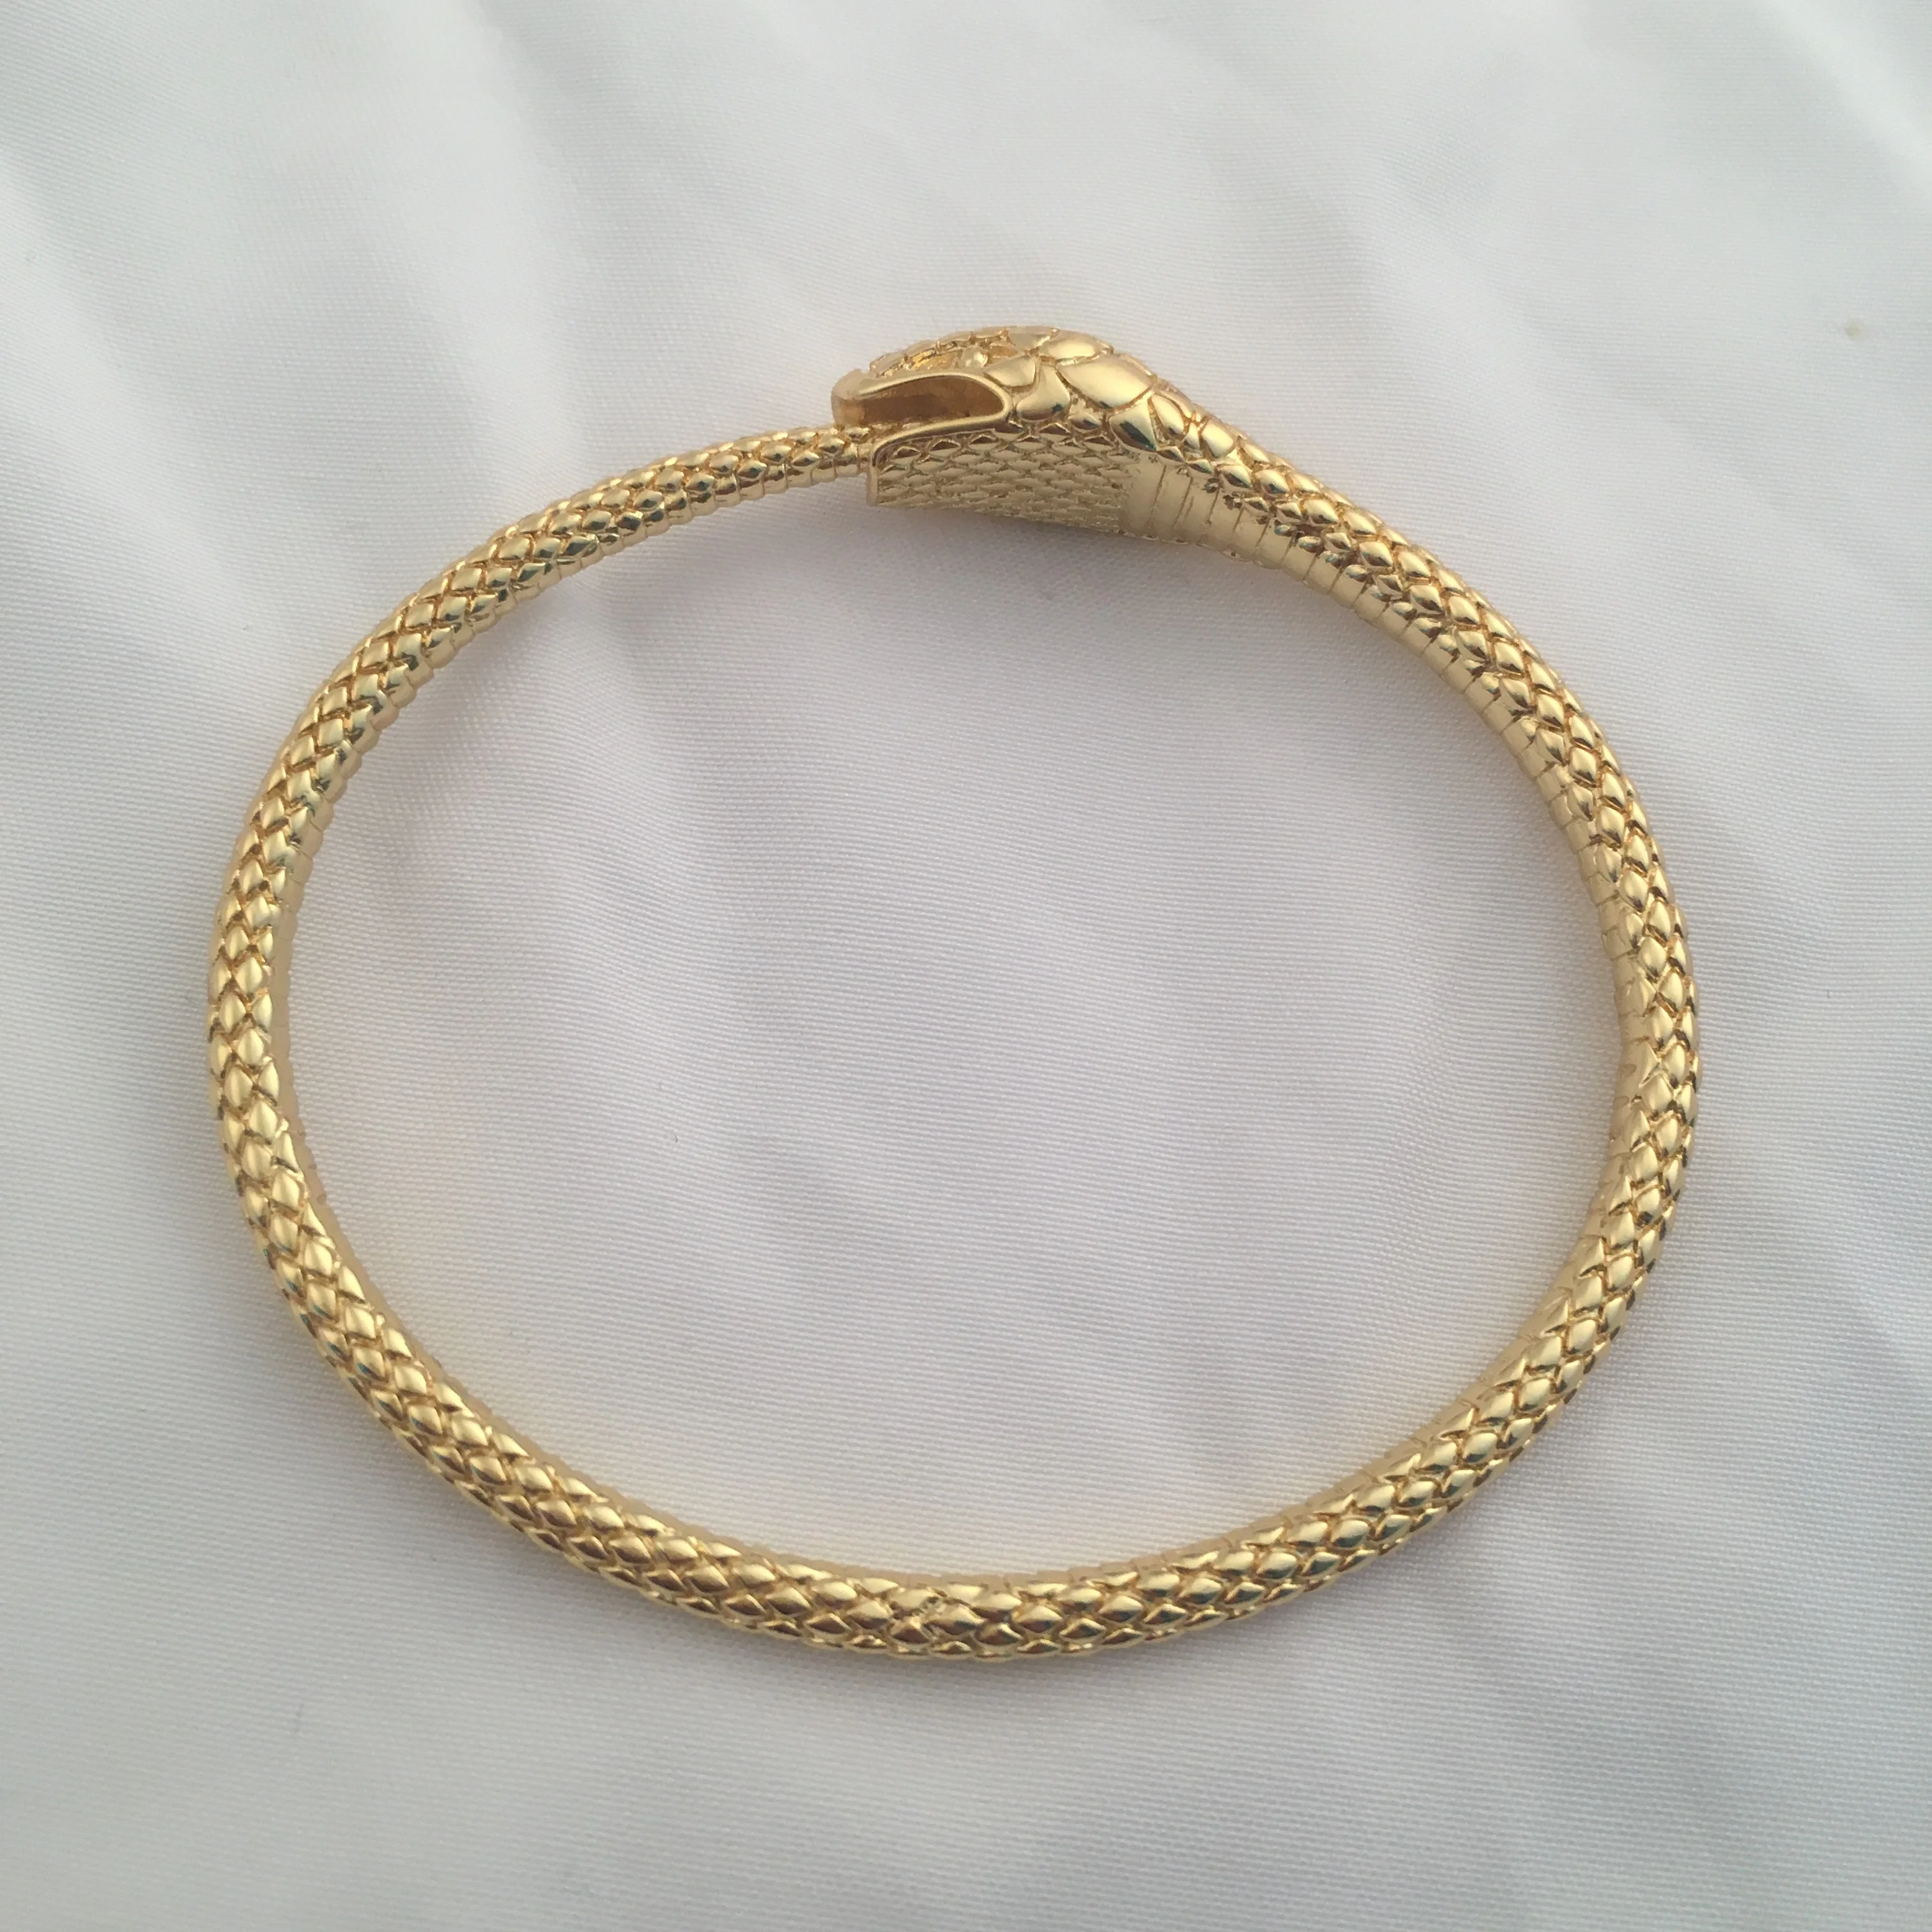 14k Gold Or 18k Jewelry Wholesale Fashion Snake Bangle For Women - Buy 14k Gold Bangle,Gold ...